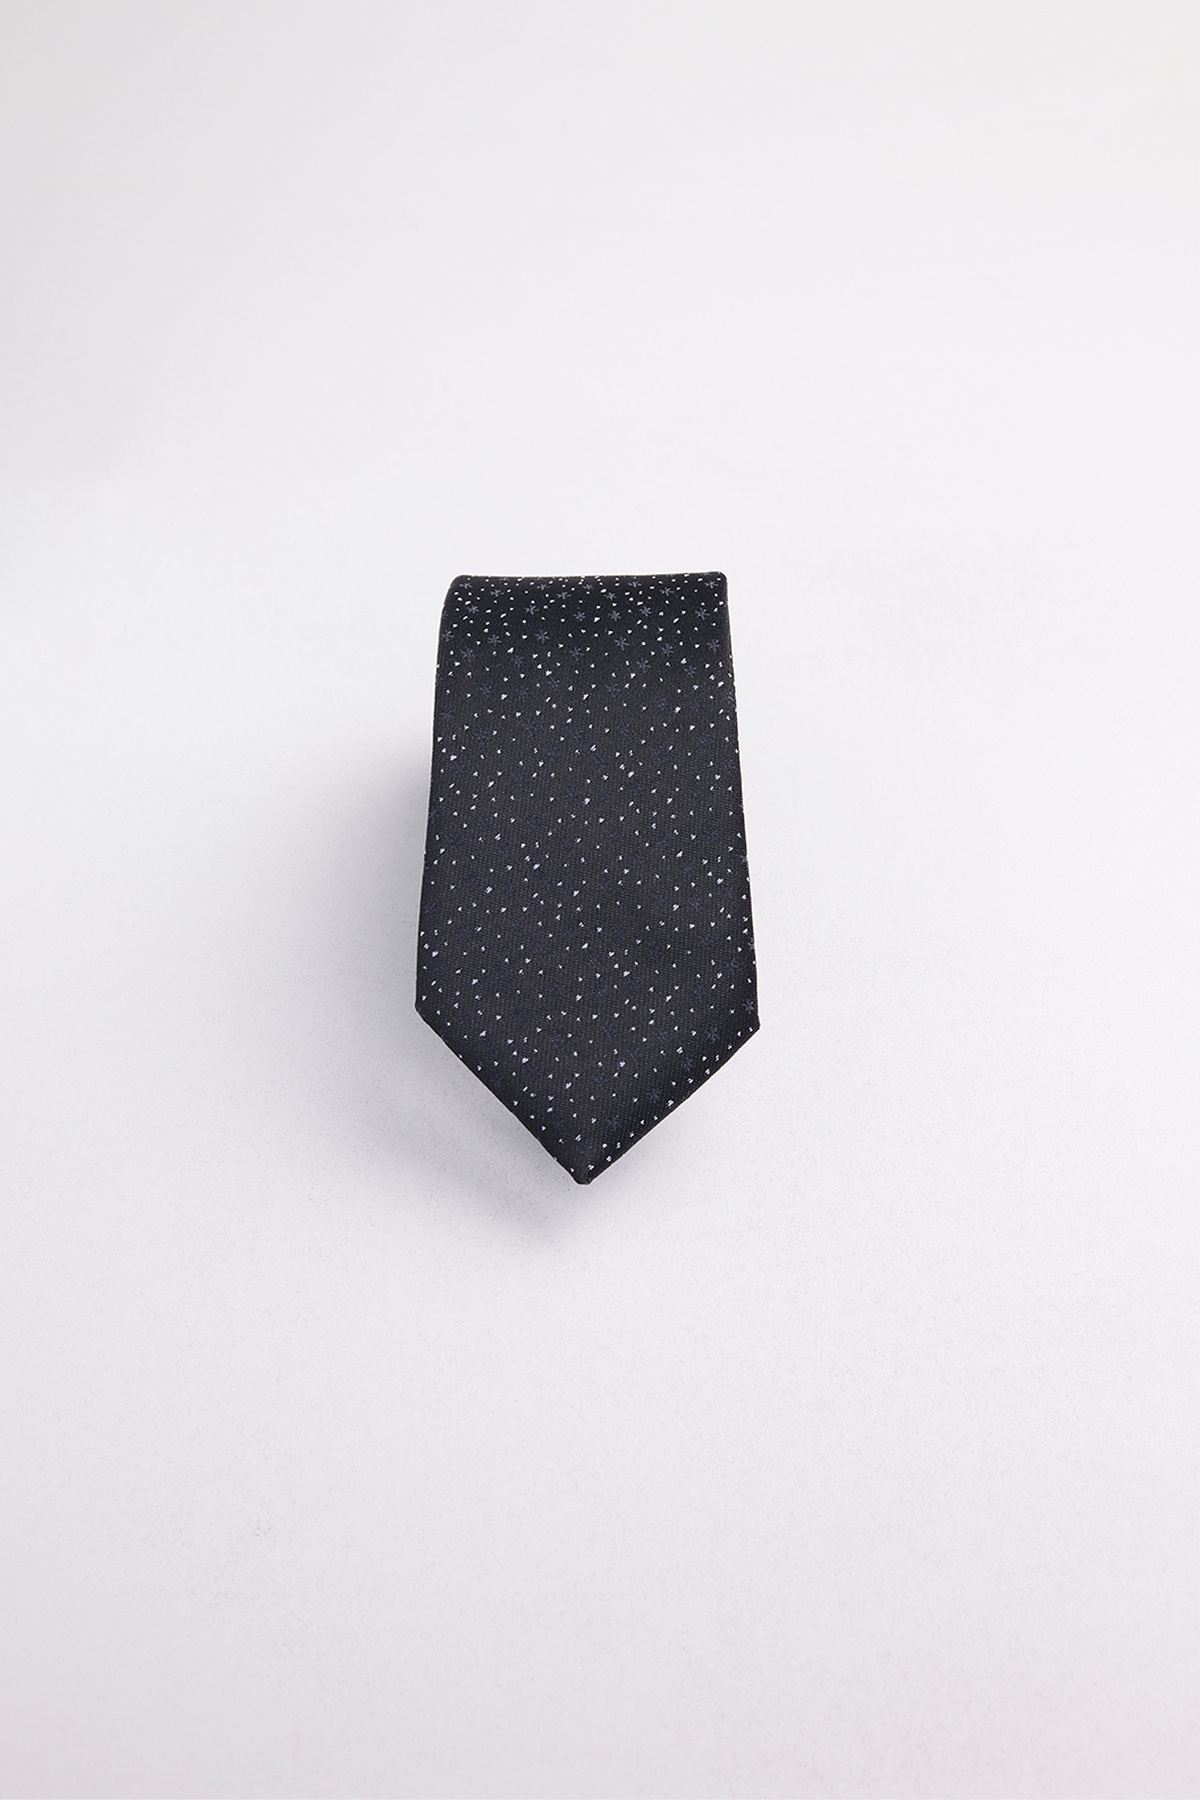  Black Tie